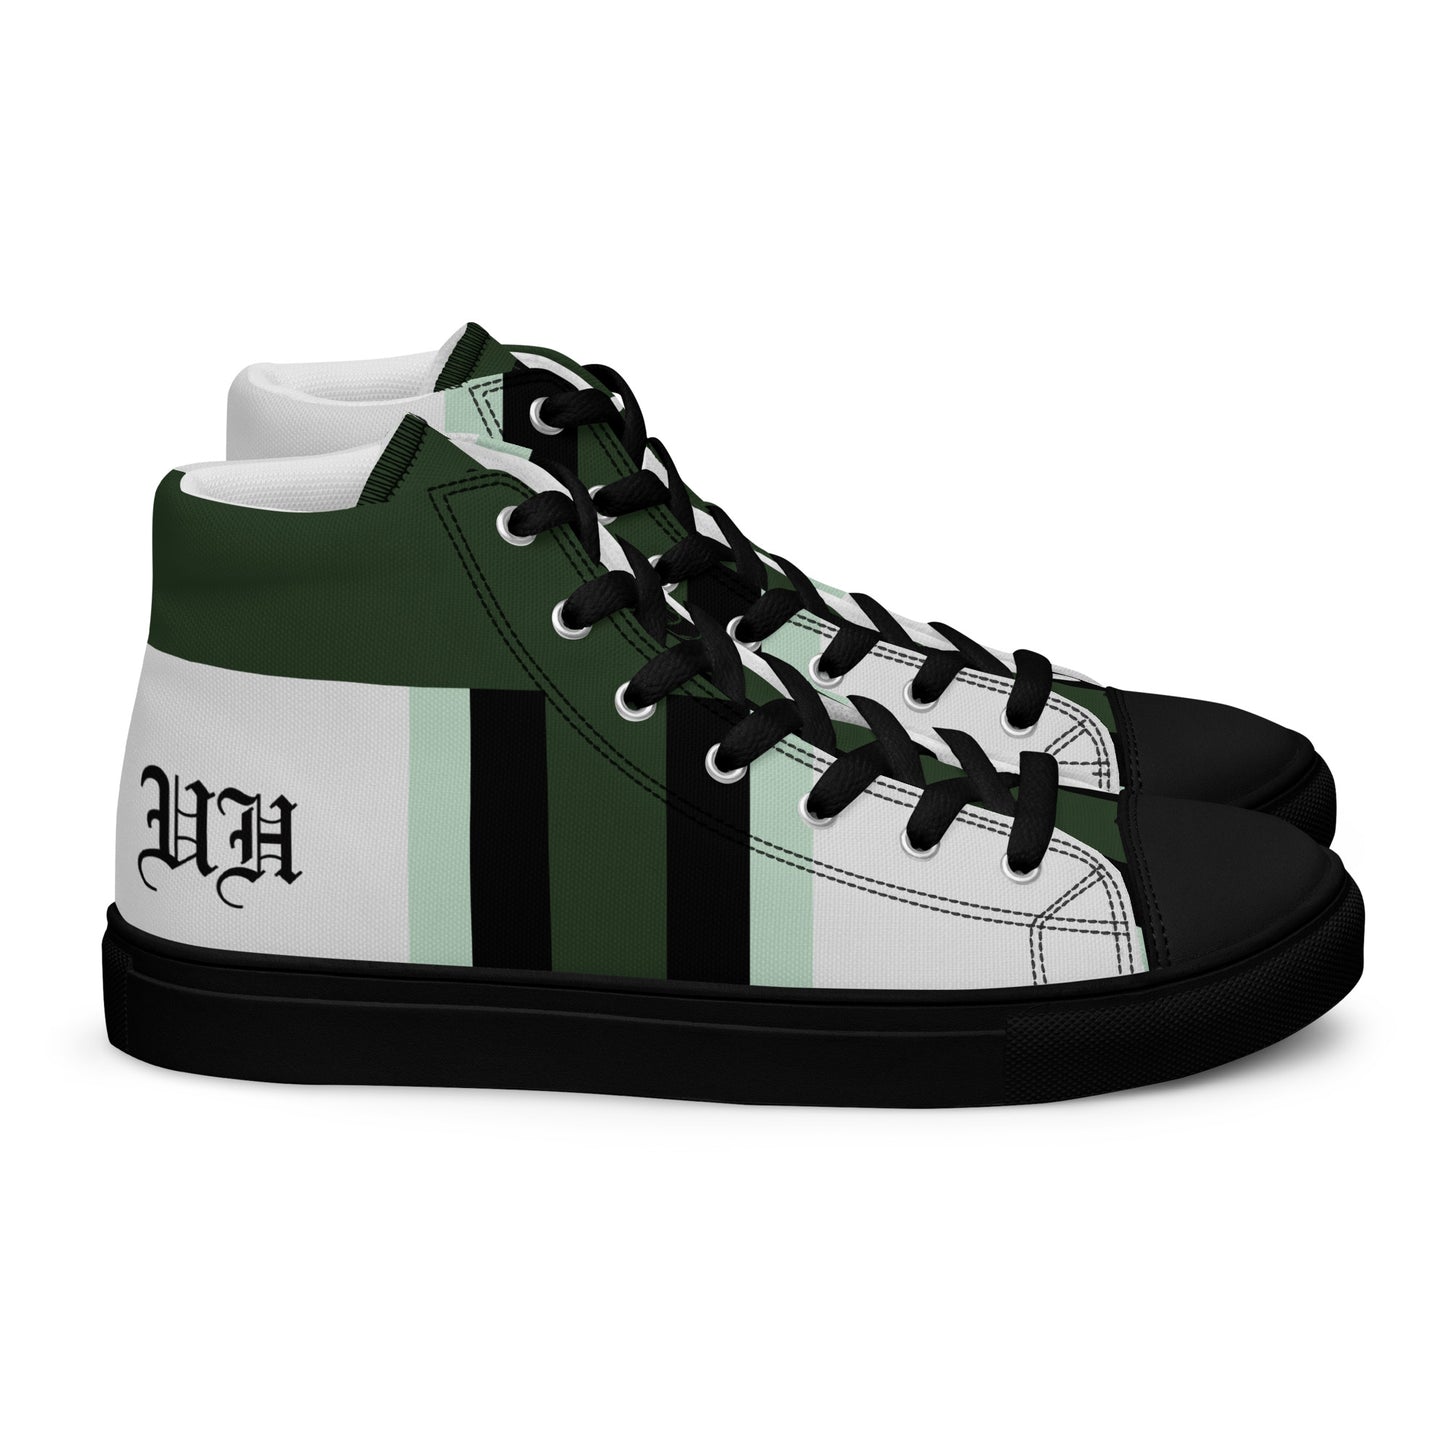 Ulli Hahn green line Shoe's